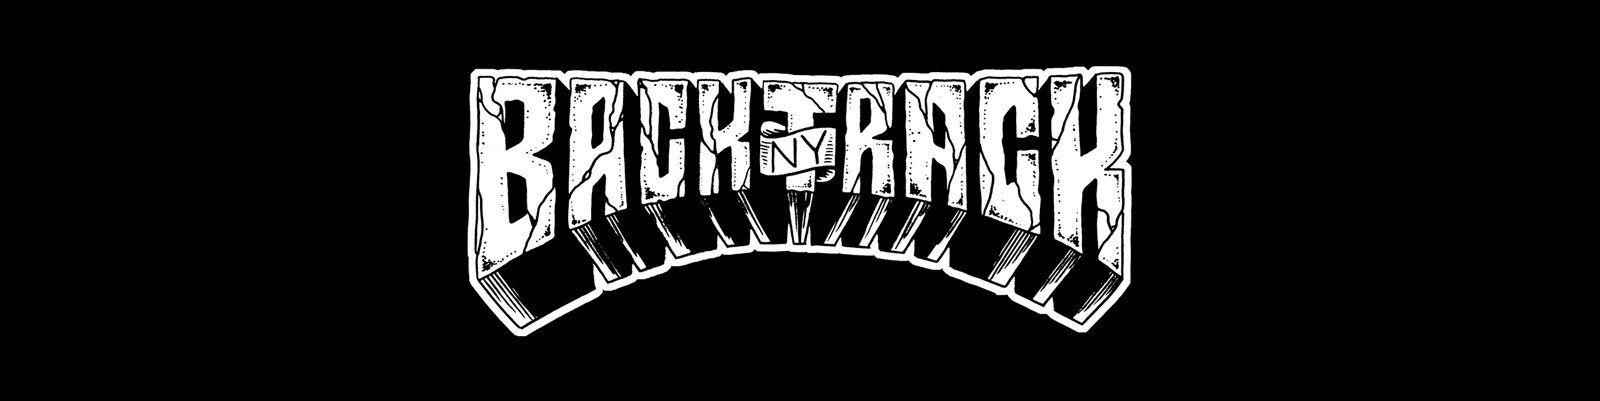 Backtrack Logo - Backtrack